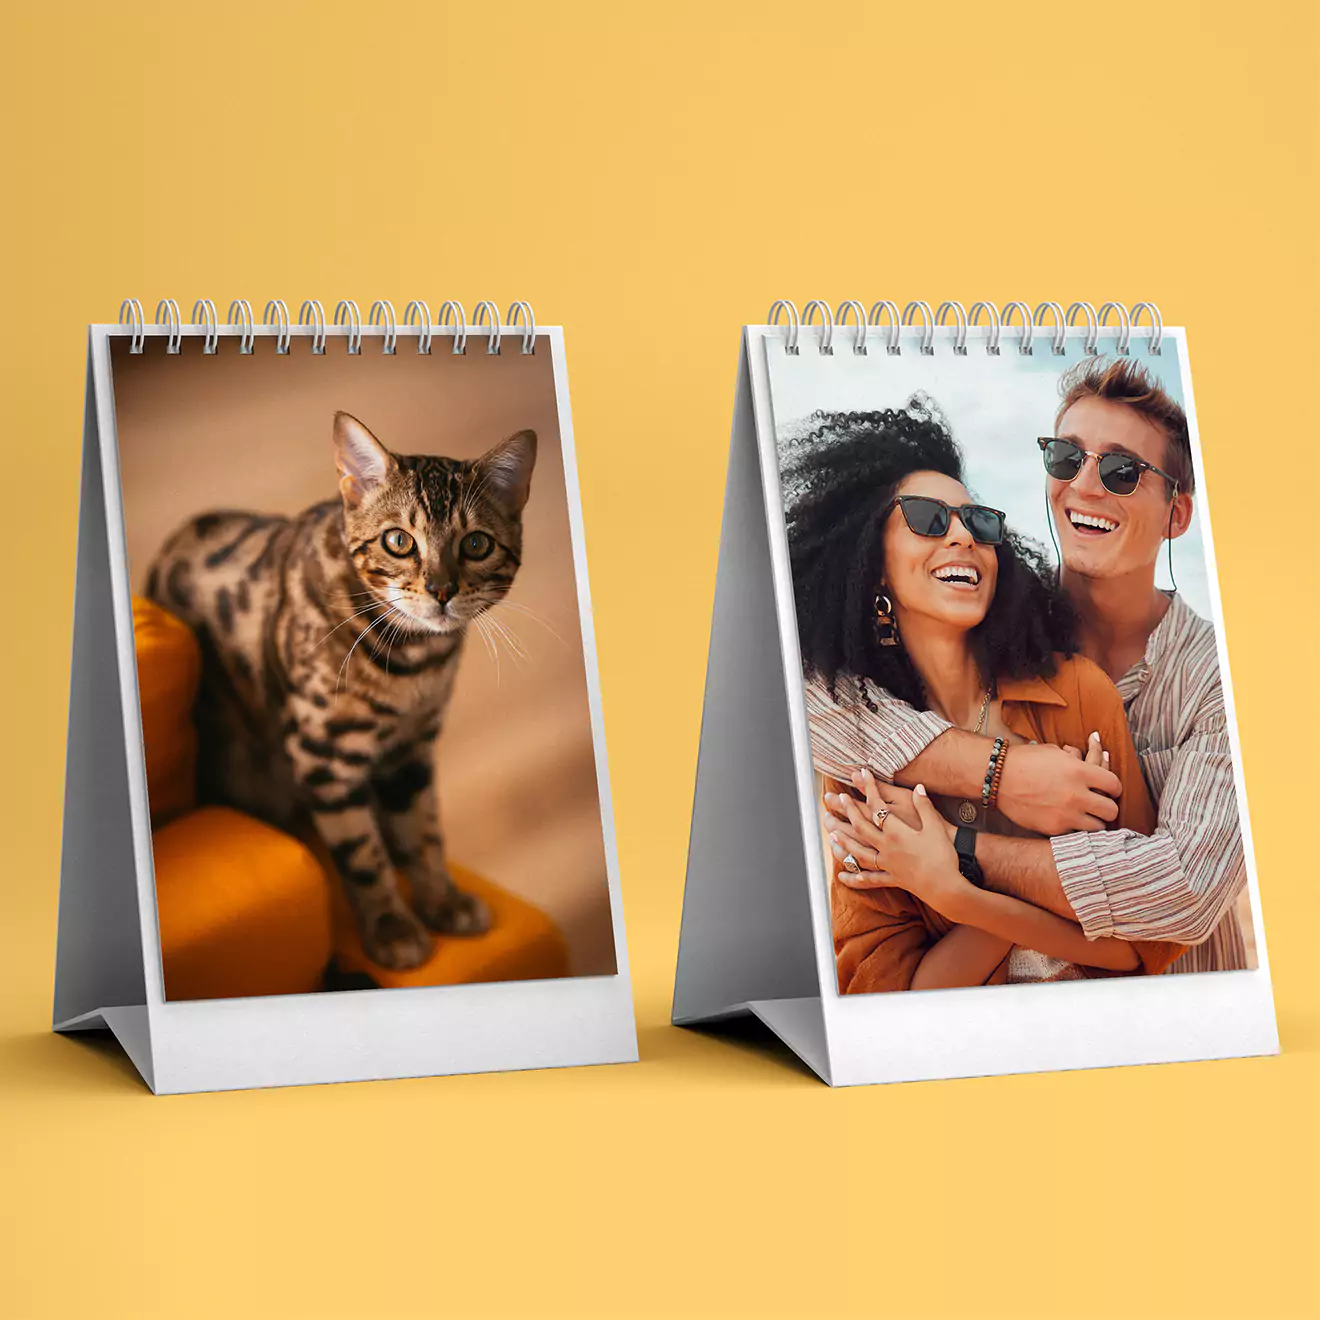 Print your own desk photo flipper gift online with RapidStudio